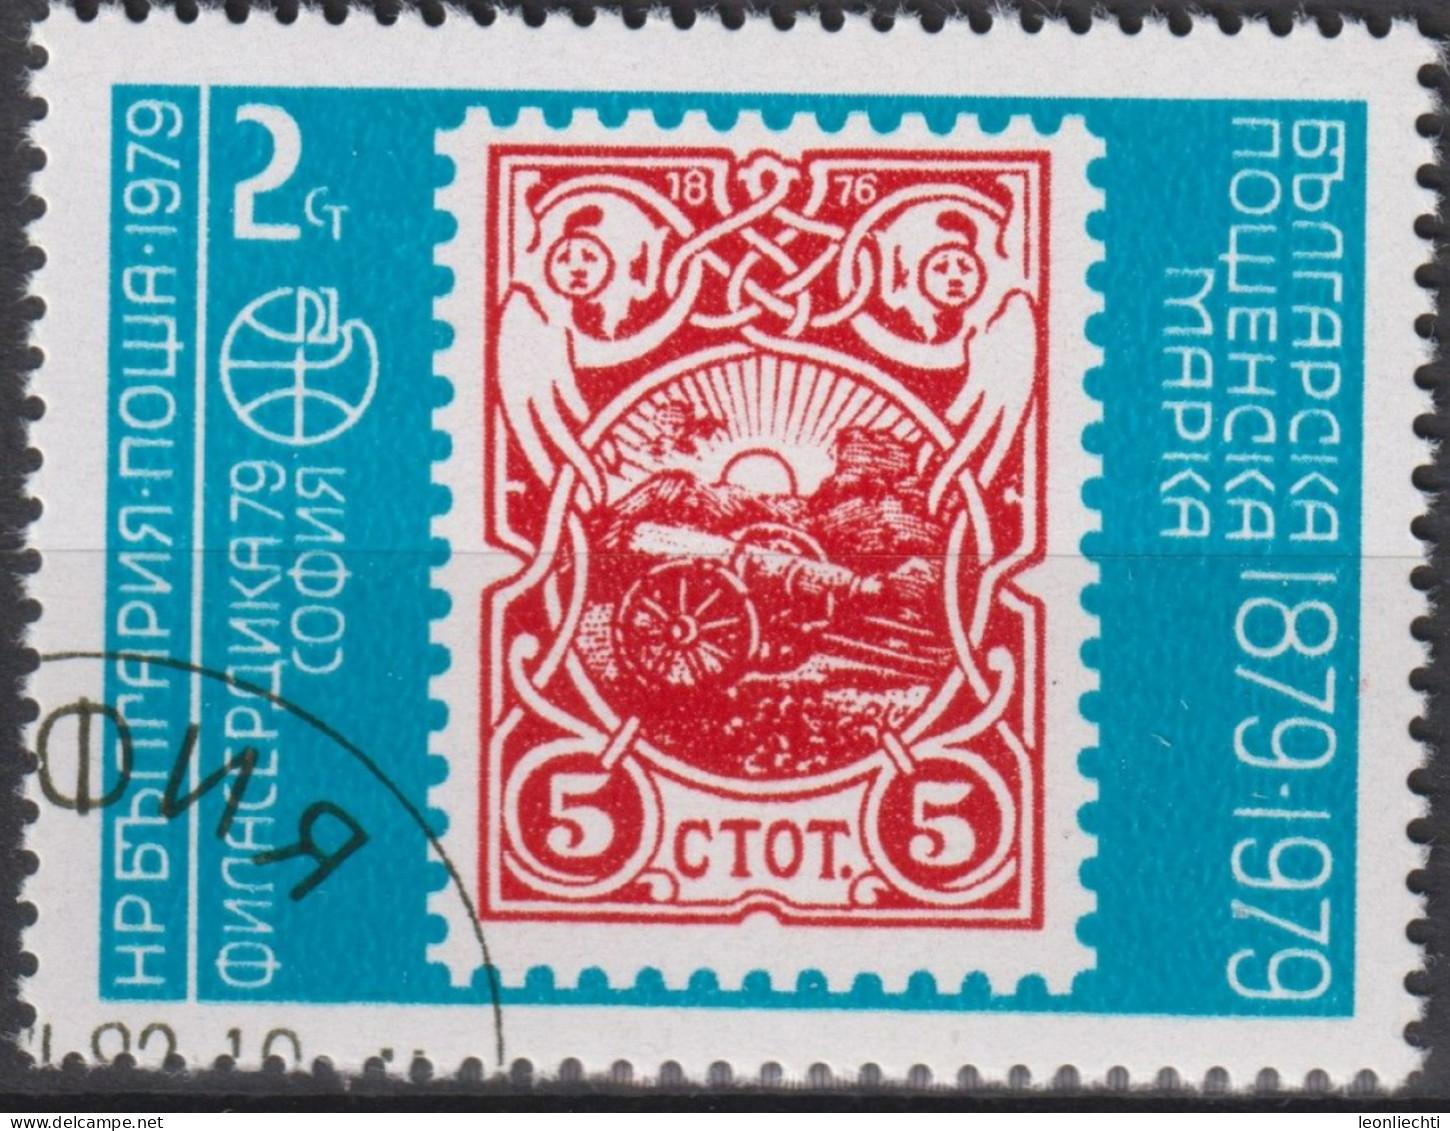 1979 Bulgarien ° Mi:BG 2747, Sn:BG 2560, Yt:BG 2439, Philaserdica '79,1901 “Cherrywooh Cannon” Stamp - Gebraucht